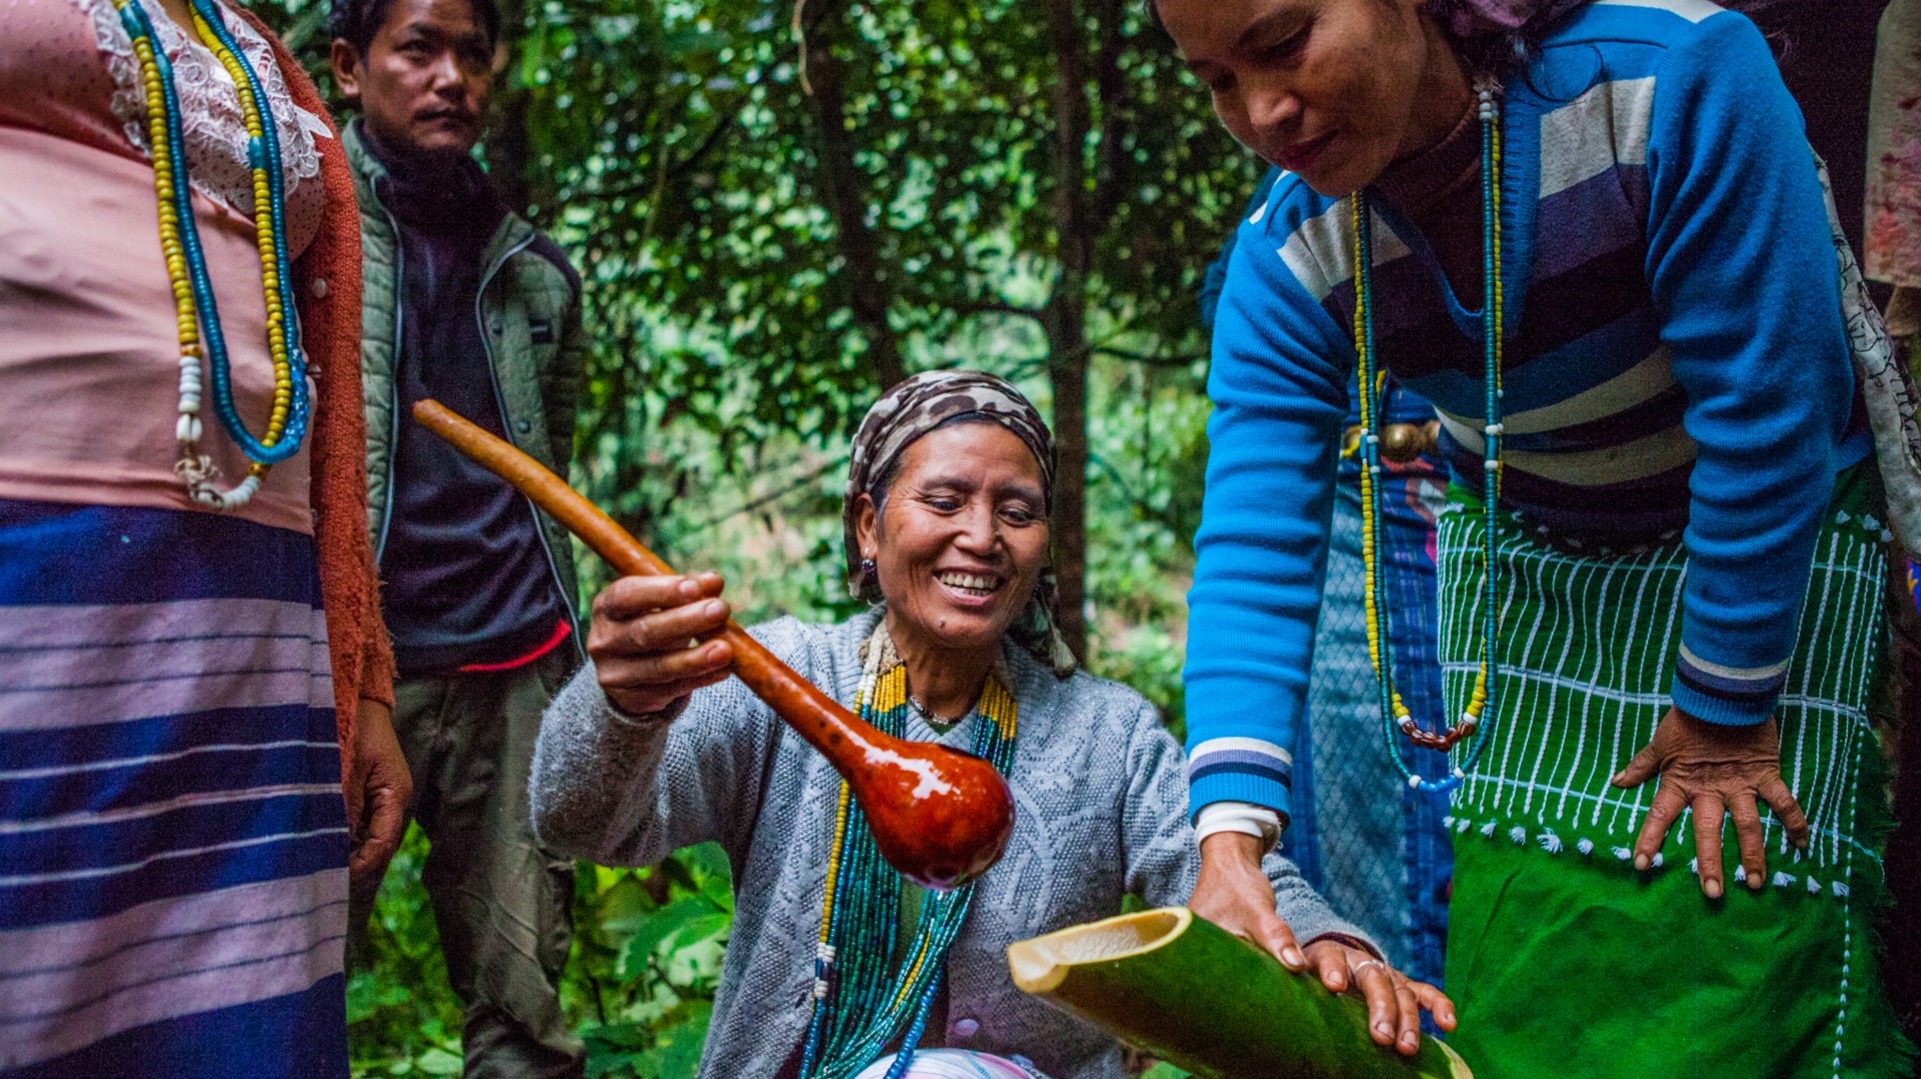 At Arunachal Pradesh's Basar Confluence, a celebration of Galo culture, an ecofriendly way of life